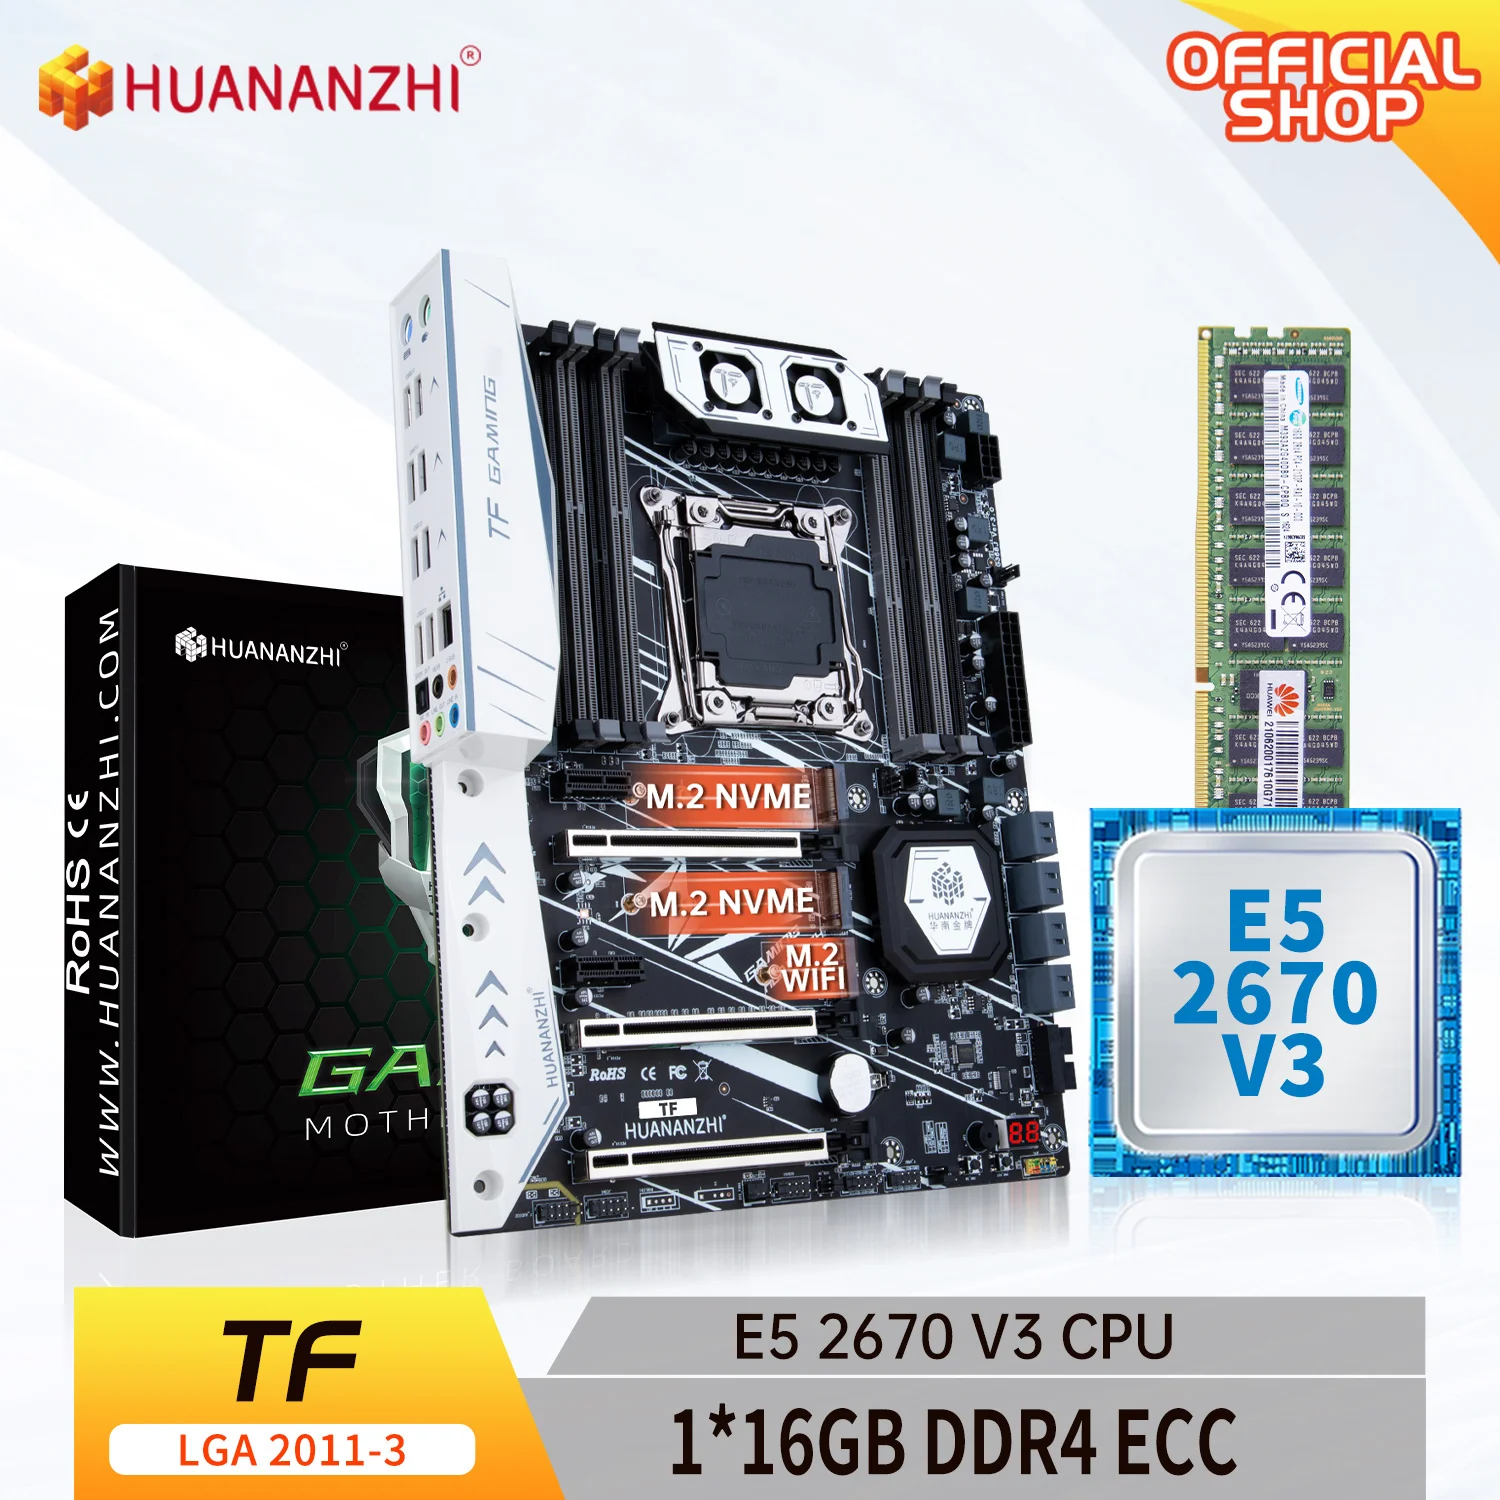 

HUANANZHI X99 TF LGA 2011-3 XEON X99 Motherboard with Intel E5 2670 V3 with 1*16G DDR4 RECC memory combo kit set M.2 NVME